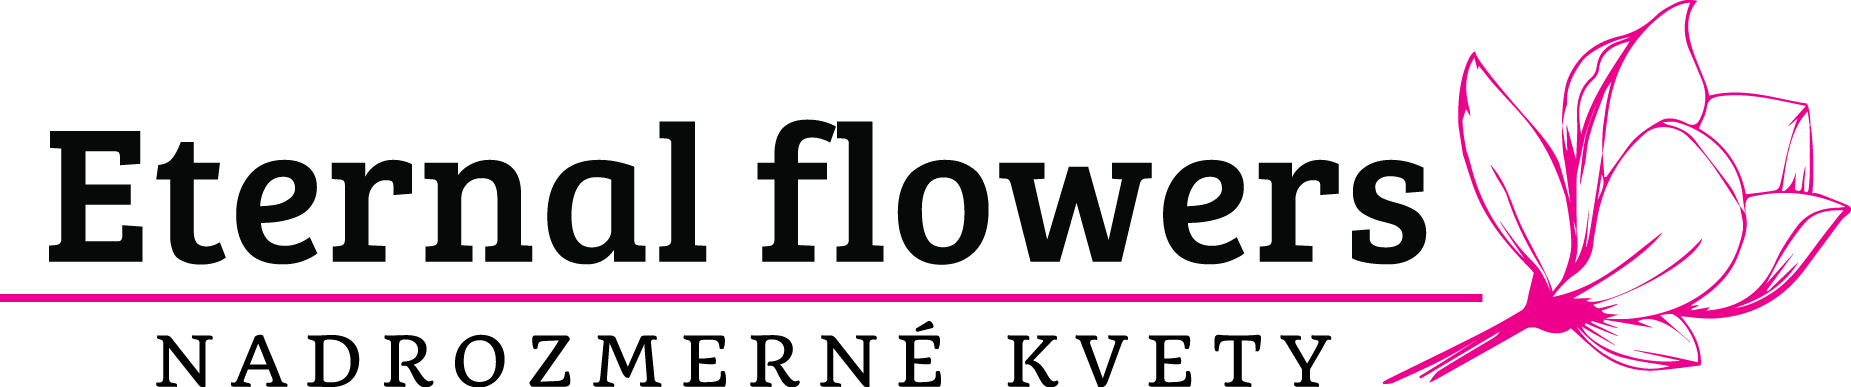 ETERNAL FLOWERS logo finalKnew 002